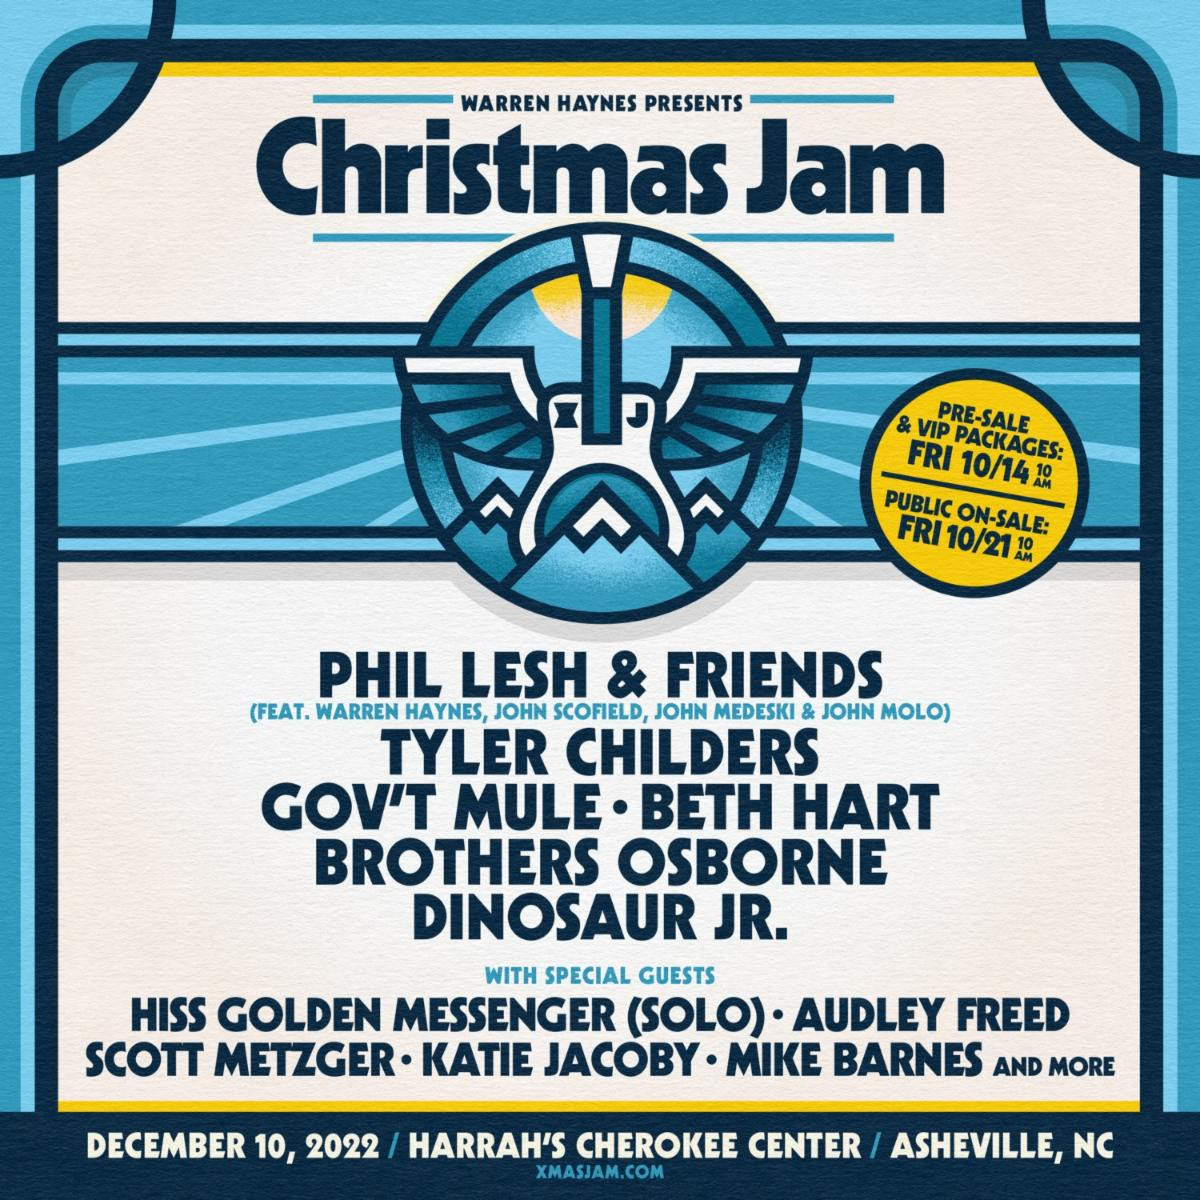 Warren Haynes Details Christmas Jam Lineup Phil Lesh & Friends, Tyler